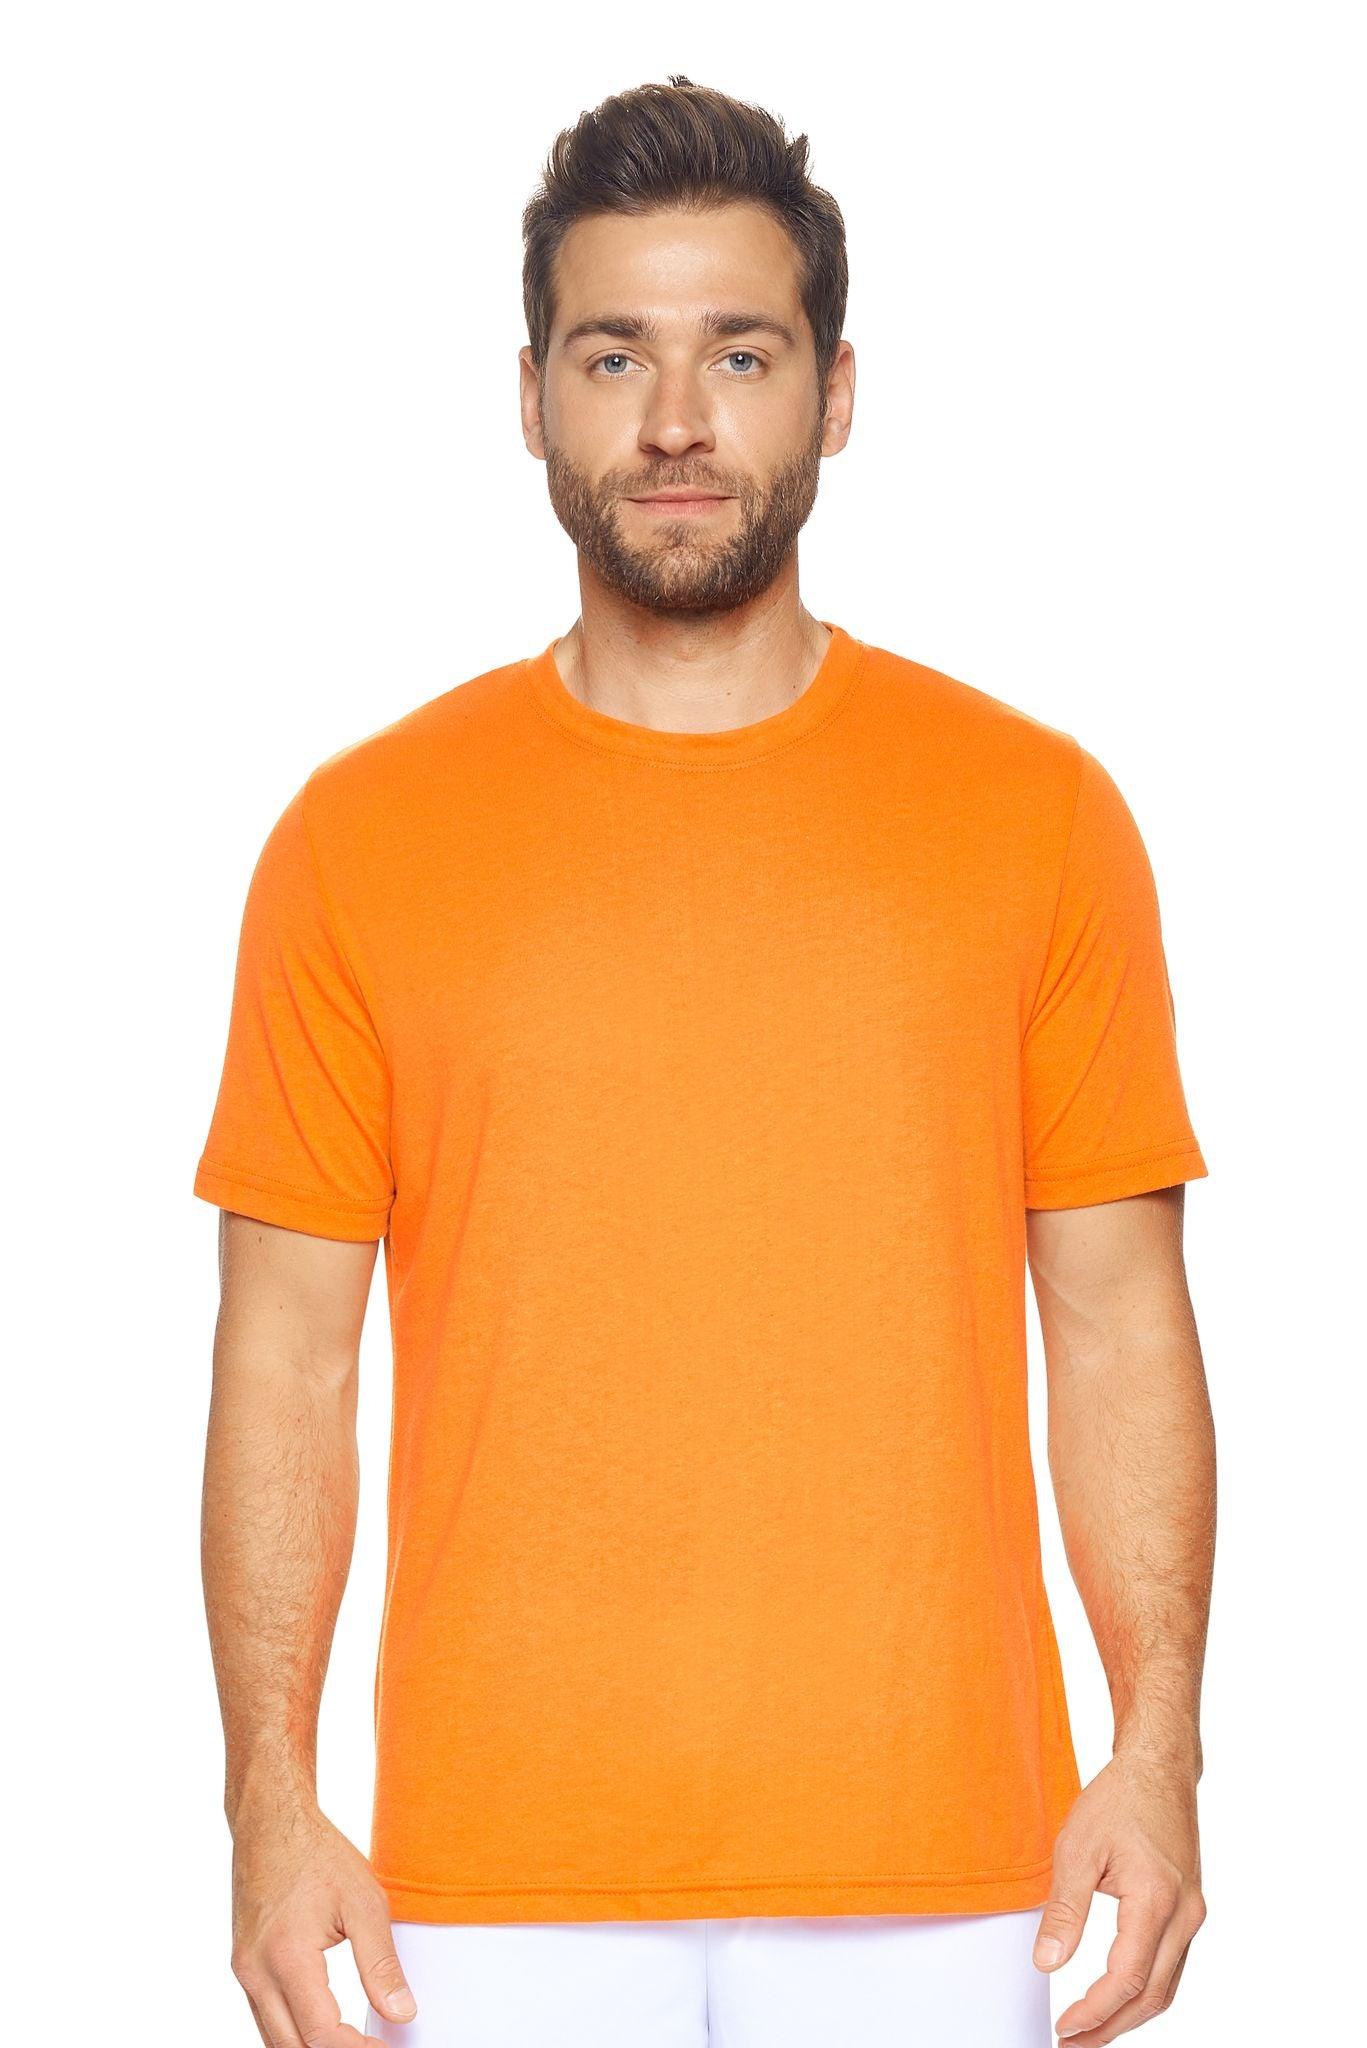 AB801🇺🇸 TriTec™ Short Sleeve Tee - Expert Brand #true-orange